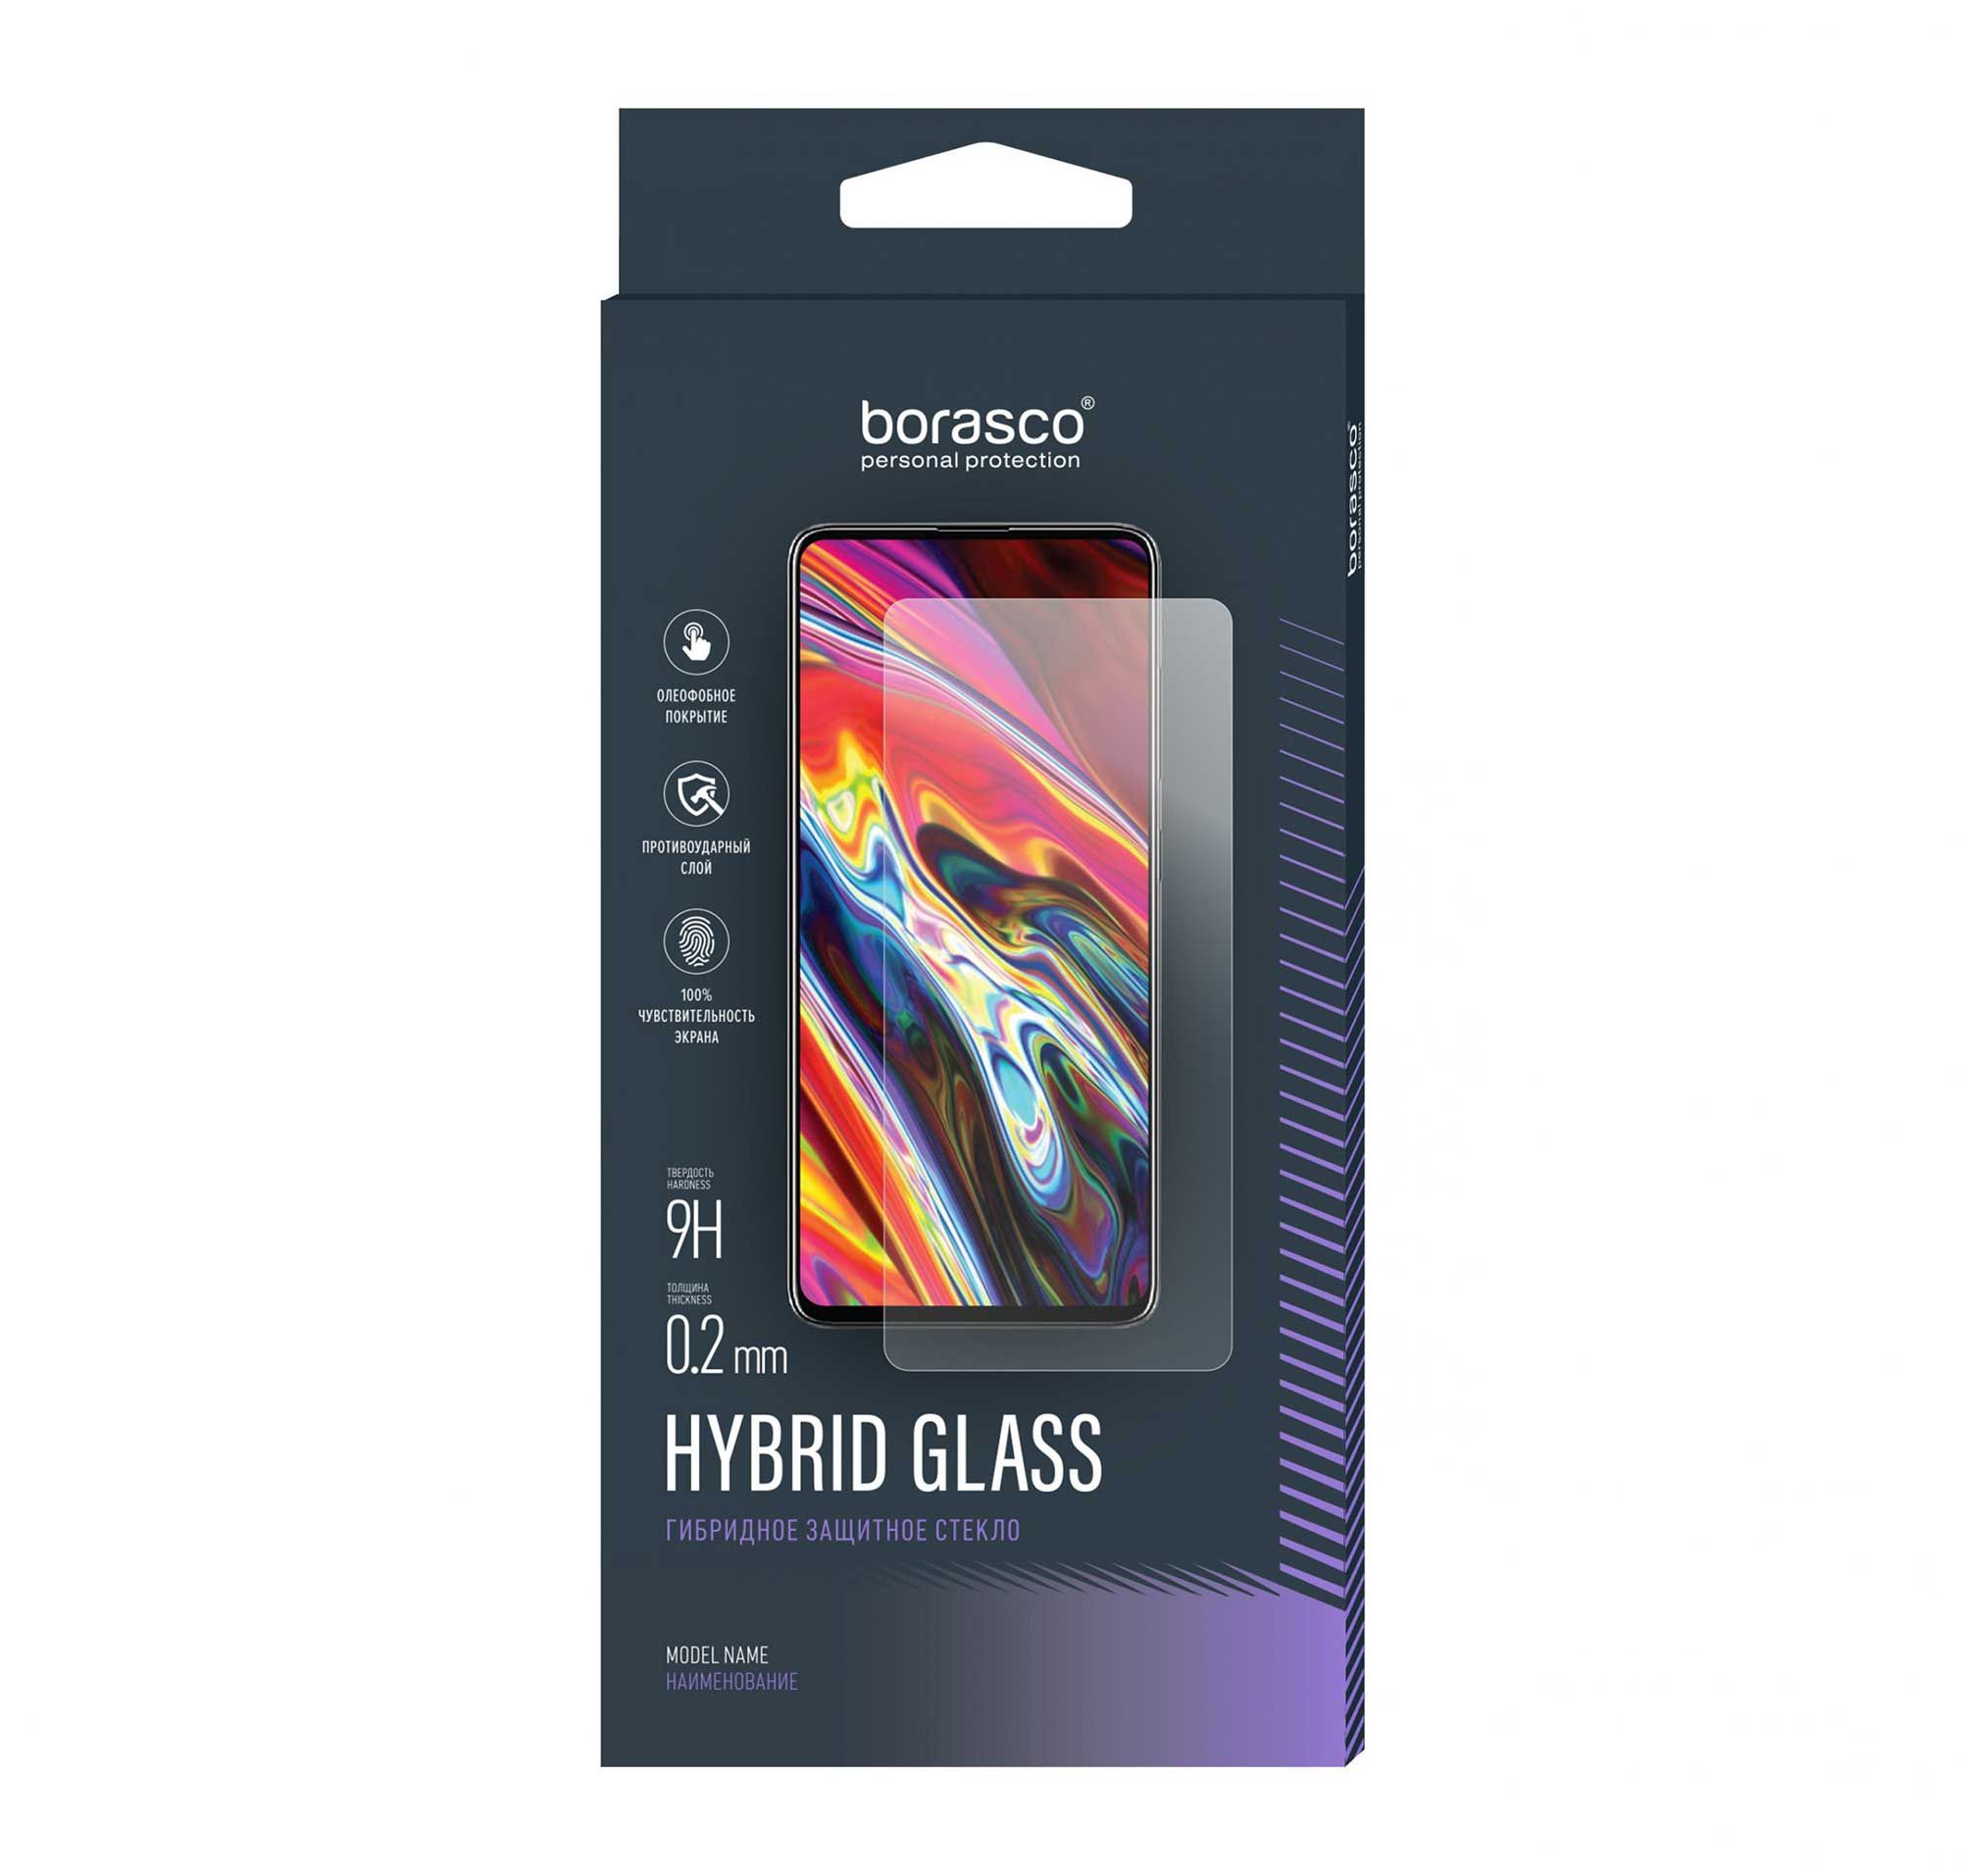 Защитное стекло Hybrid Glass для Asus Zenfone 9 закаленное стекло для asus zenfone max m1 m2 zb602kl zb601kl zb631kl zb633kl защитное стекло для asus zb555kl zb570tl za550kl пленка